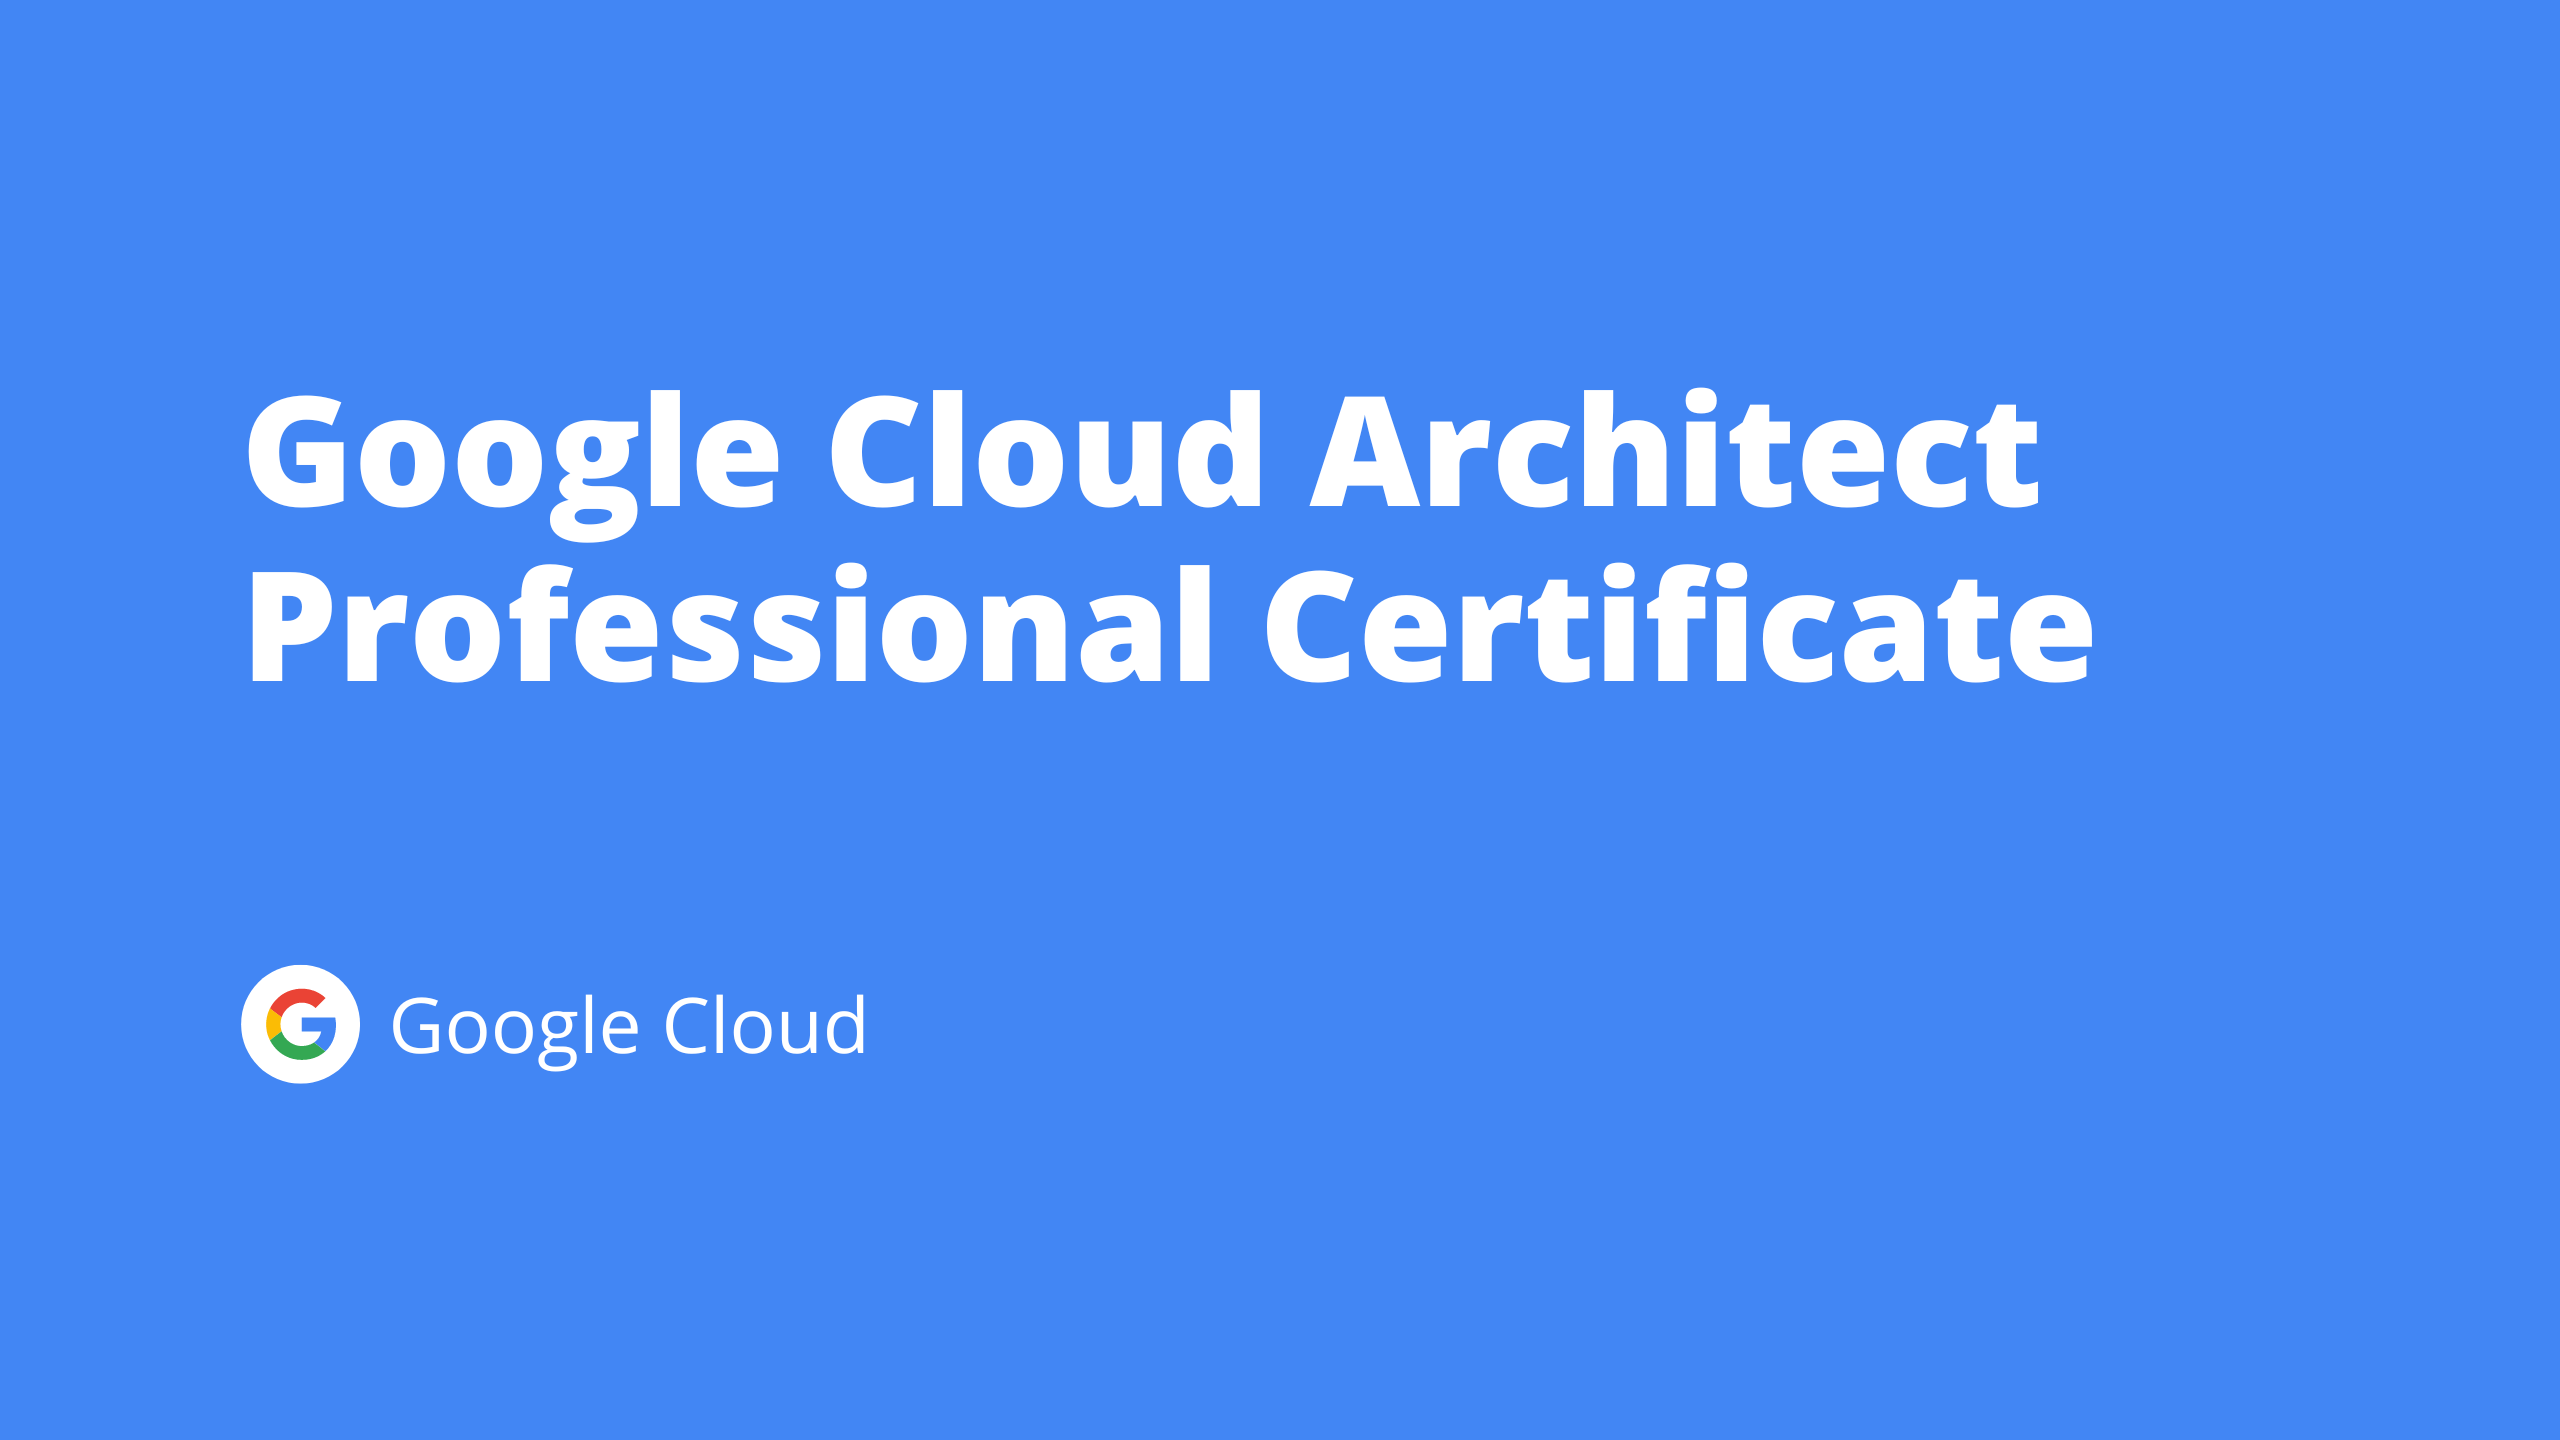 Google Cloud Architect Professional Certificate